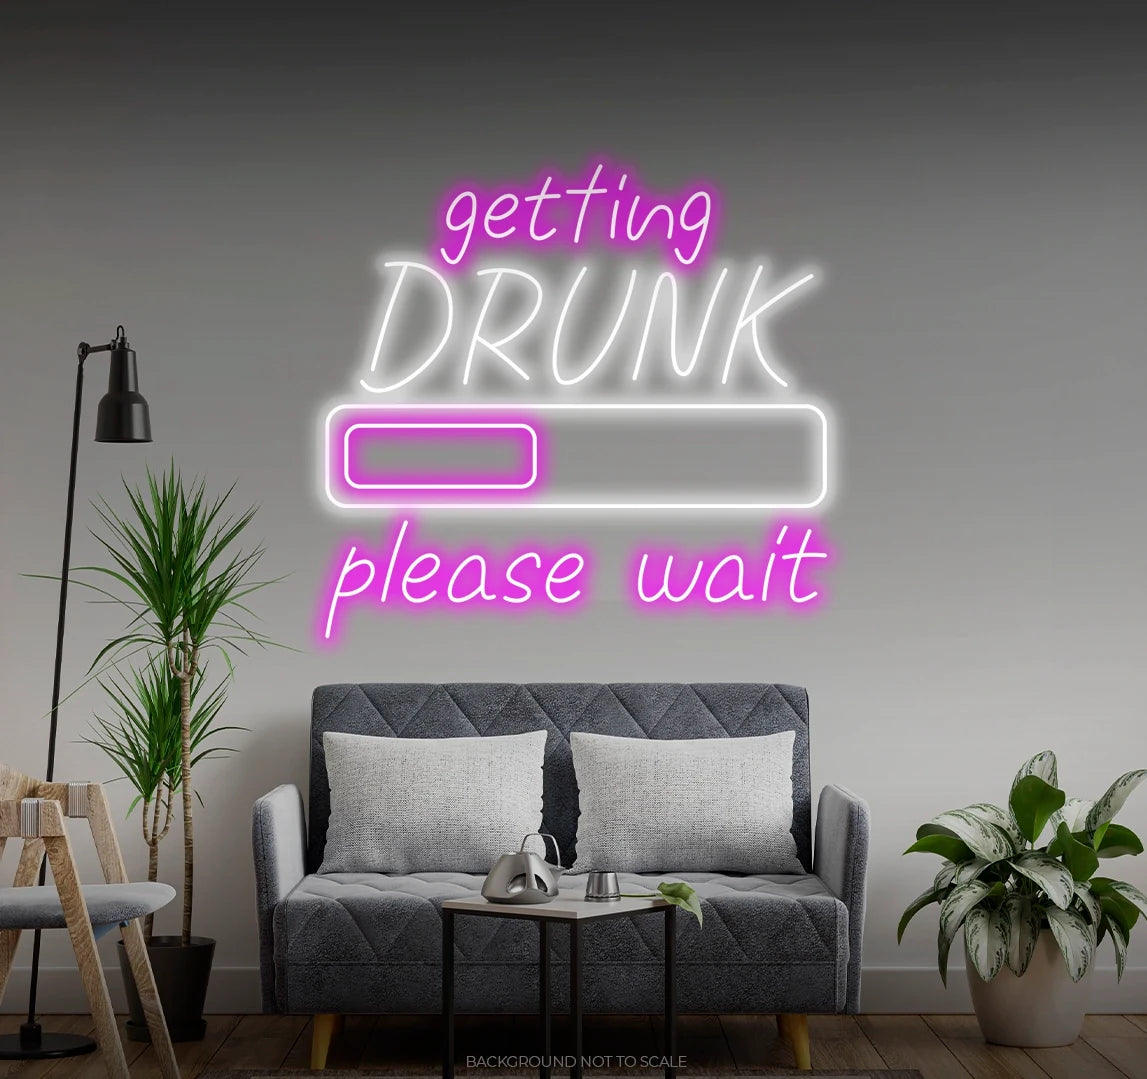 Getting drunk please wait LED neon